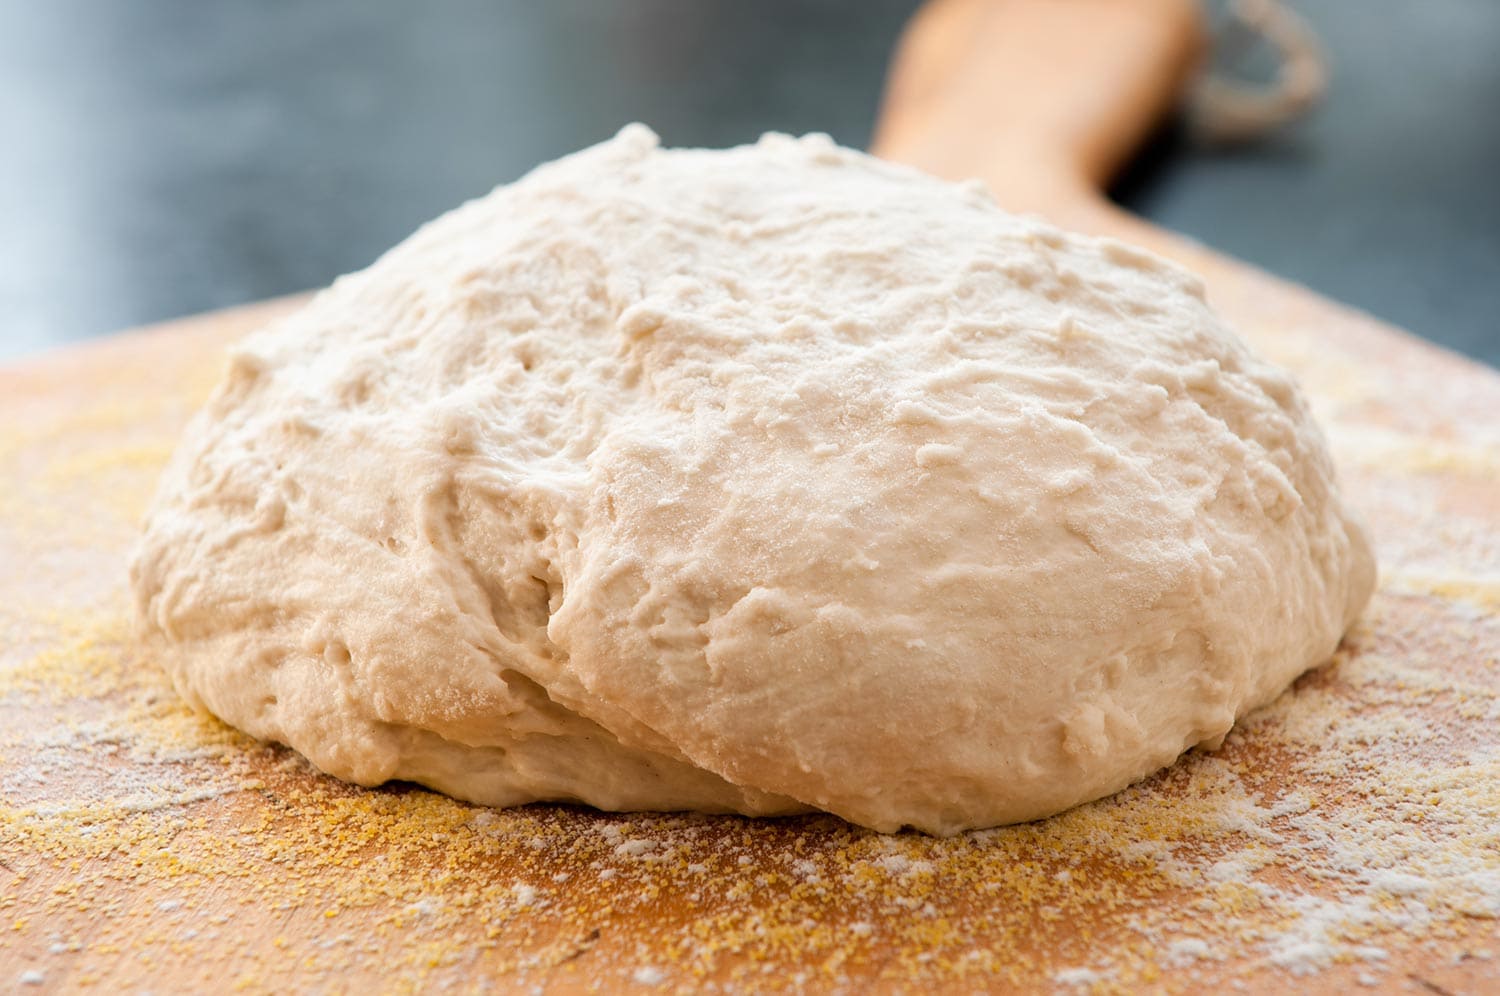 Raw bread dough sitting on paddle